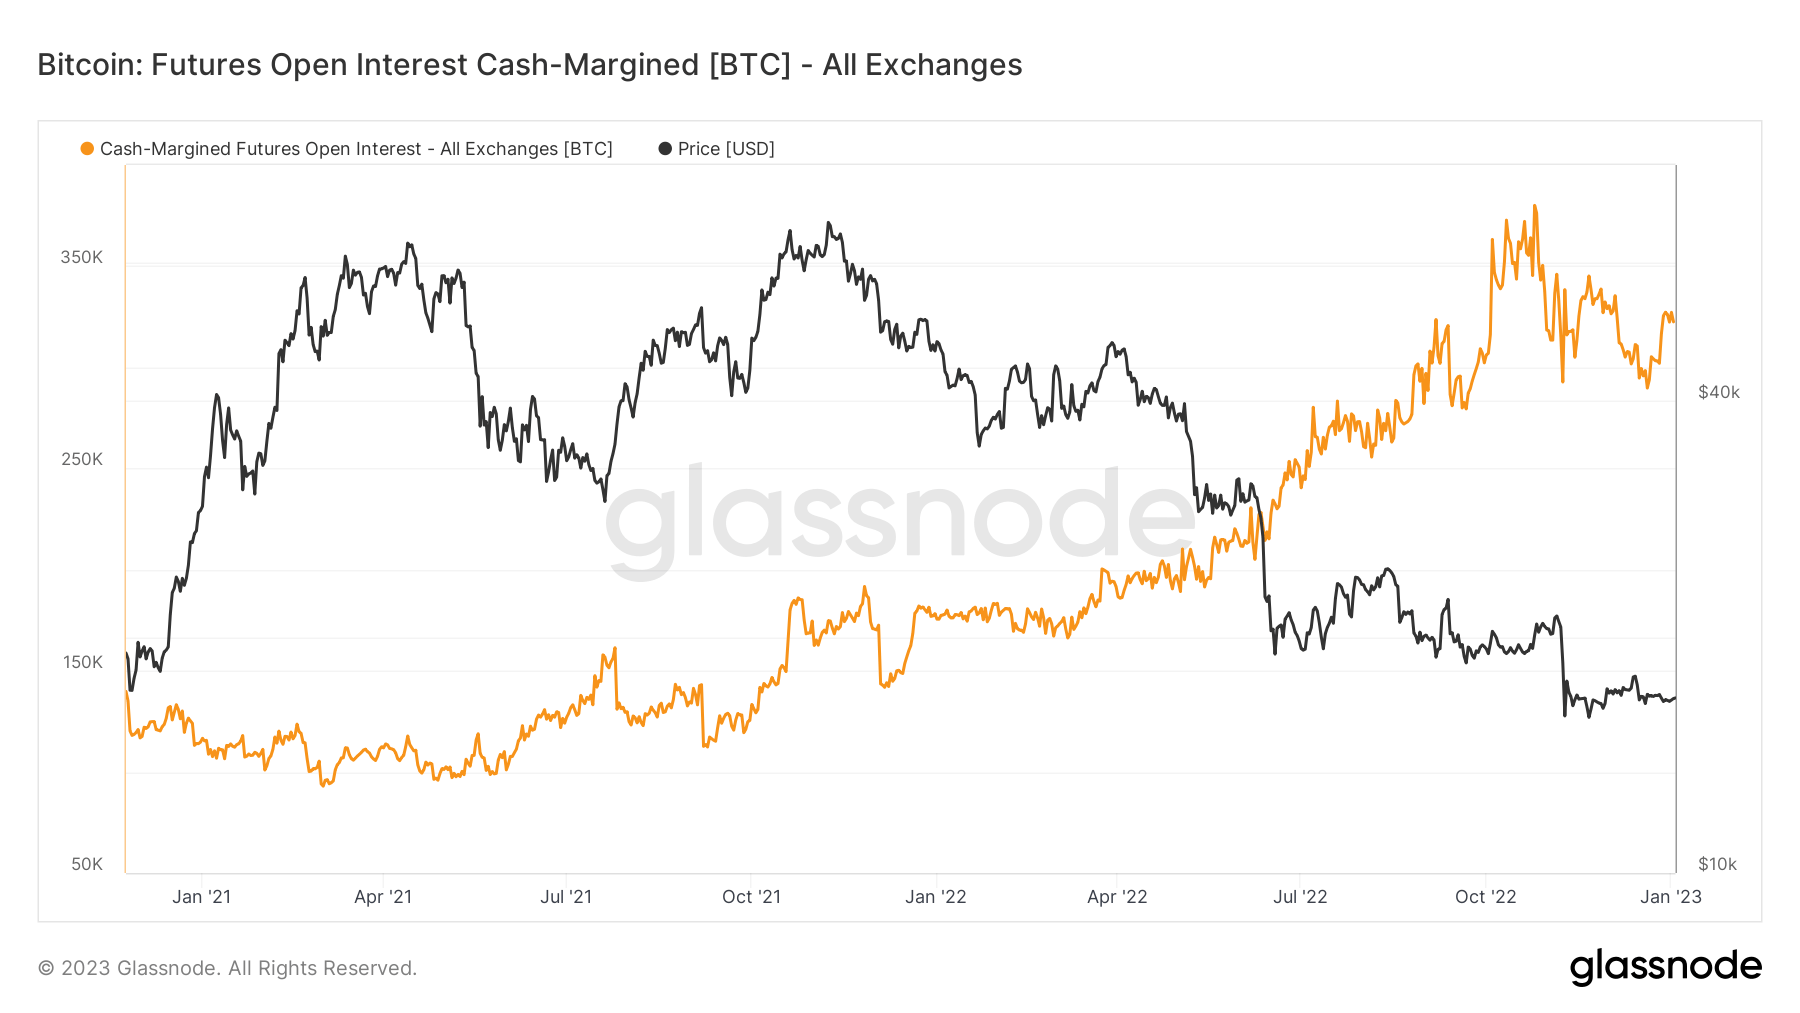 Bitcoin: Futures Open Interest Cash Margin [BTC] - Source: Grassnode